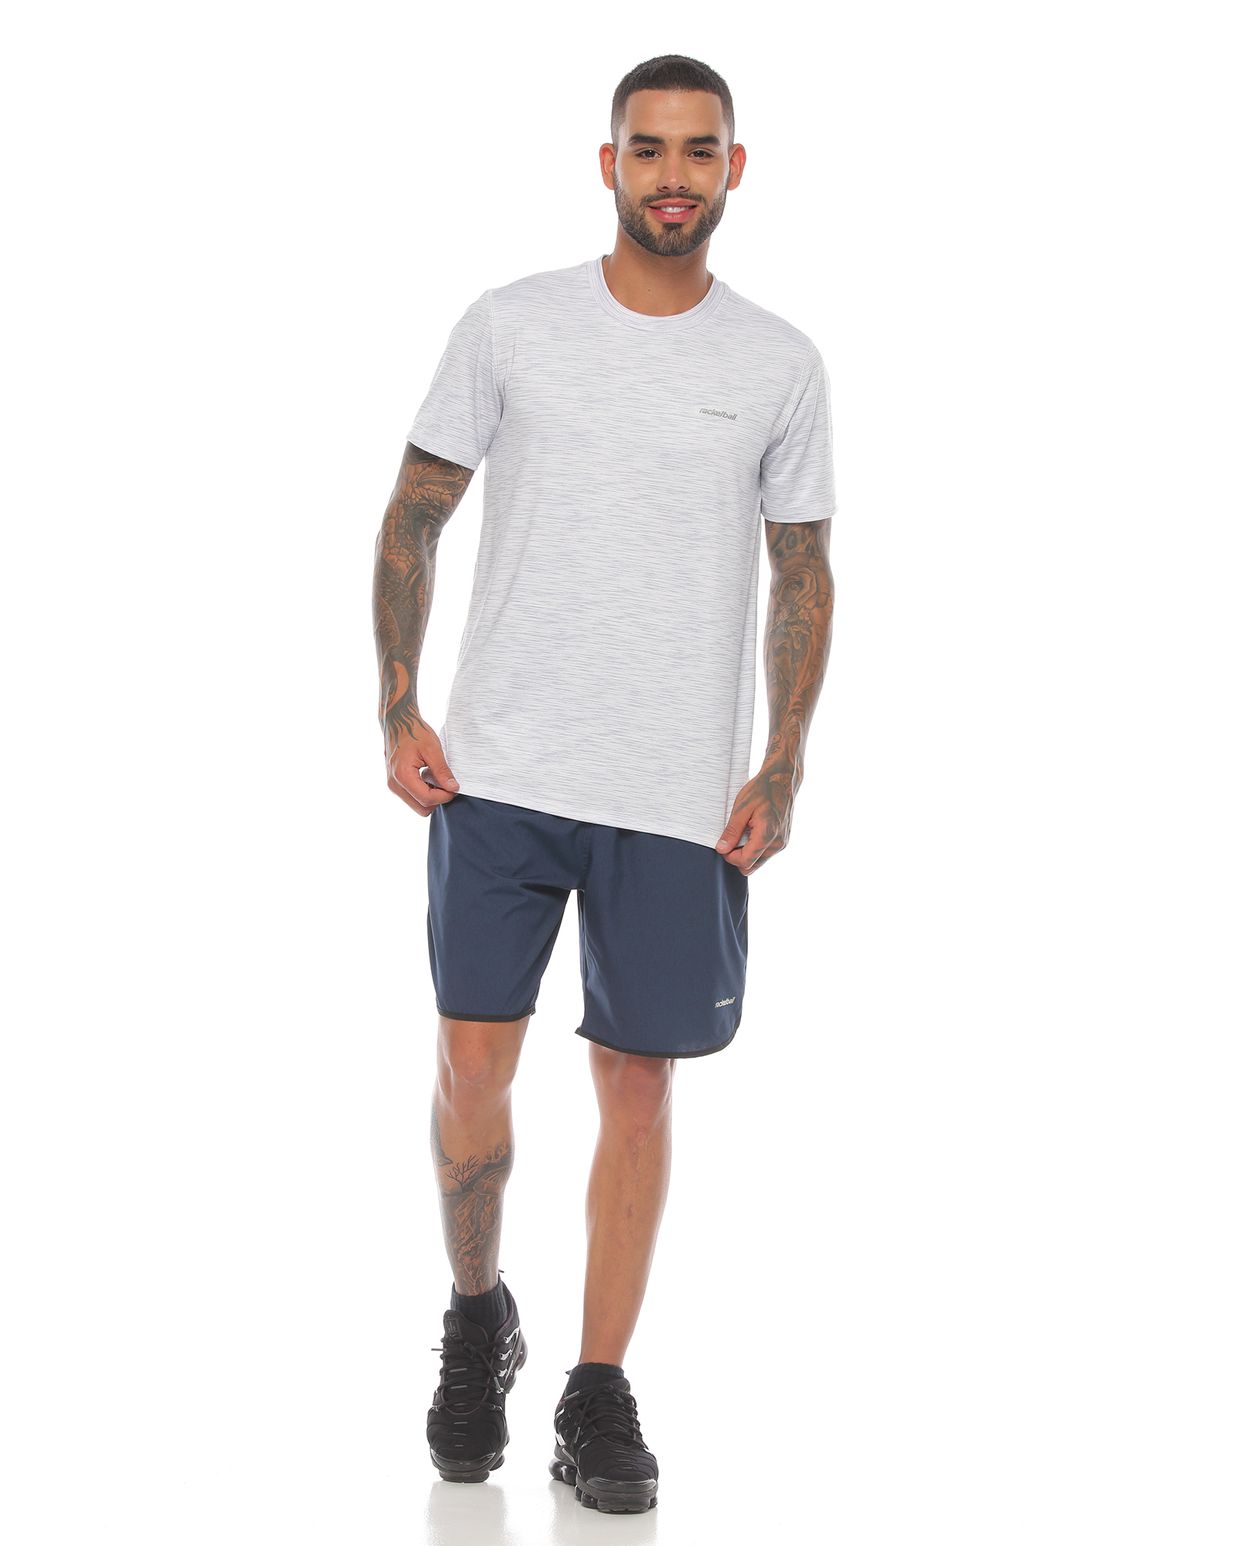 modelo con pantaloneta deportiva color petroleo negro y camiseta manga corta deportiva color blanca para hombre cuerpo completo